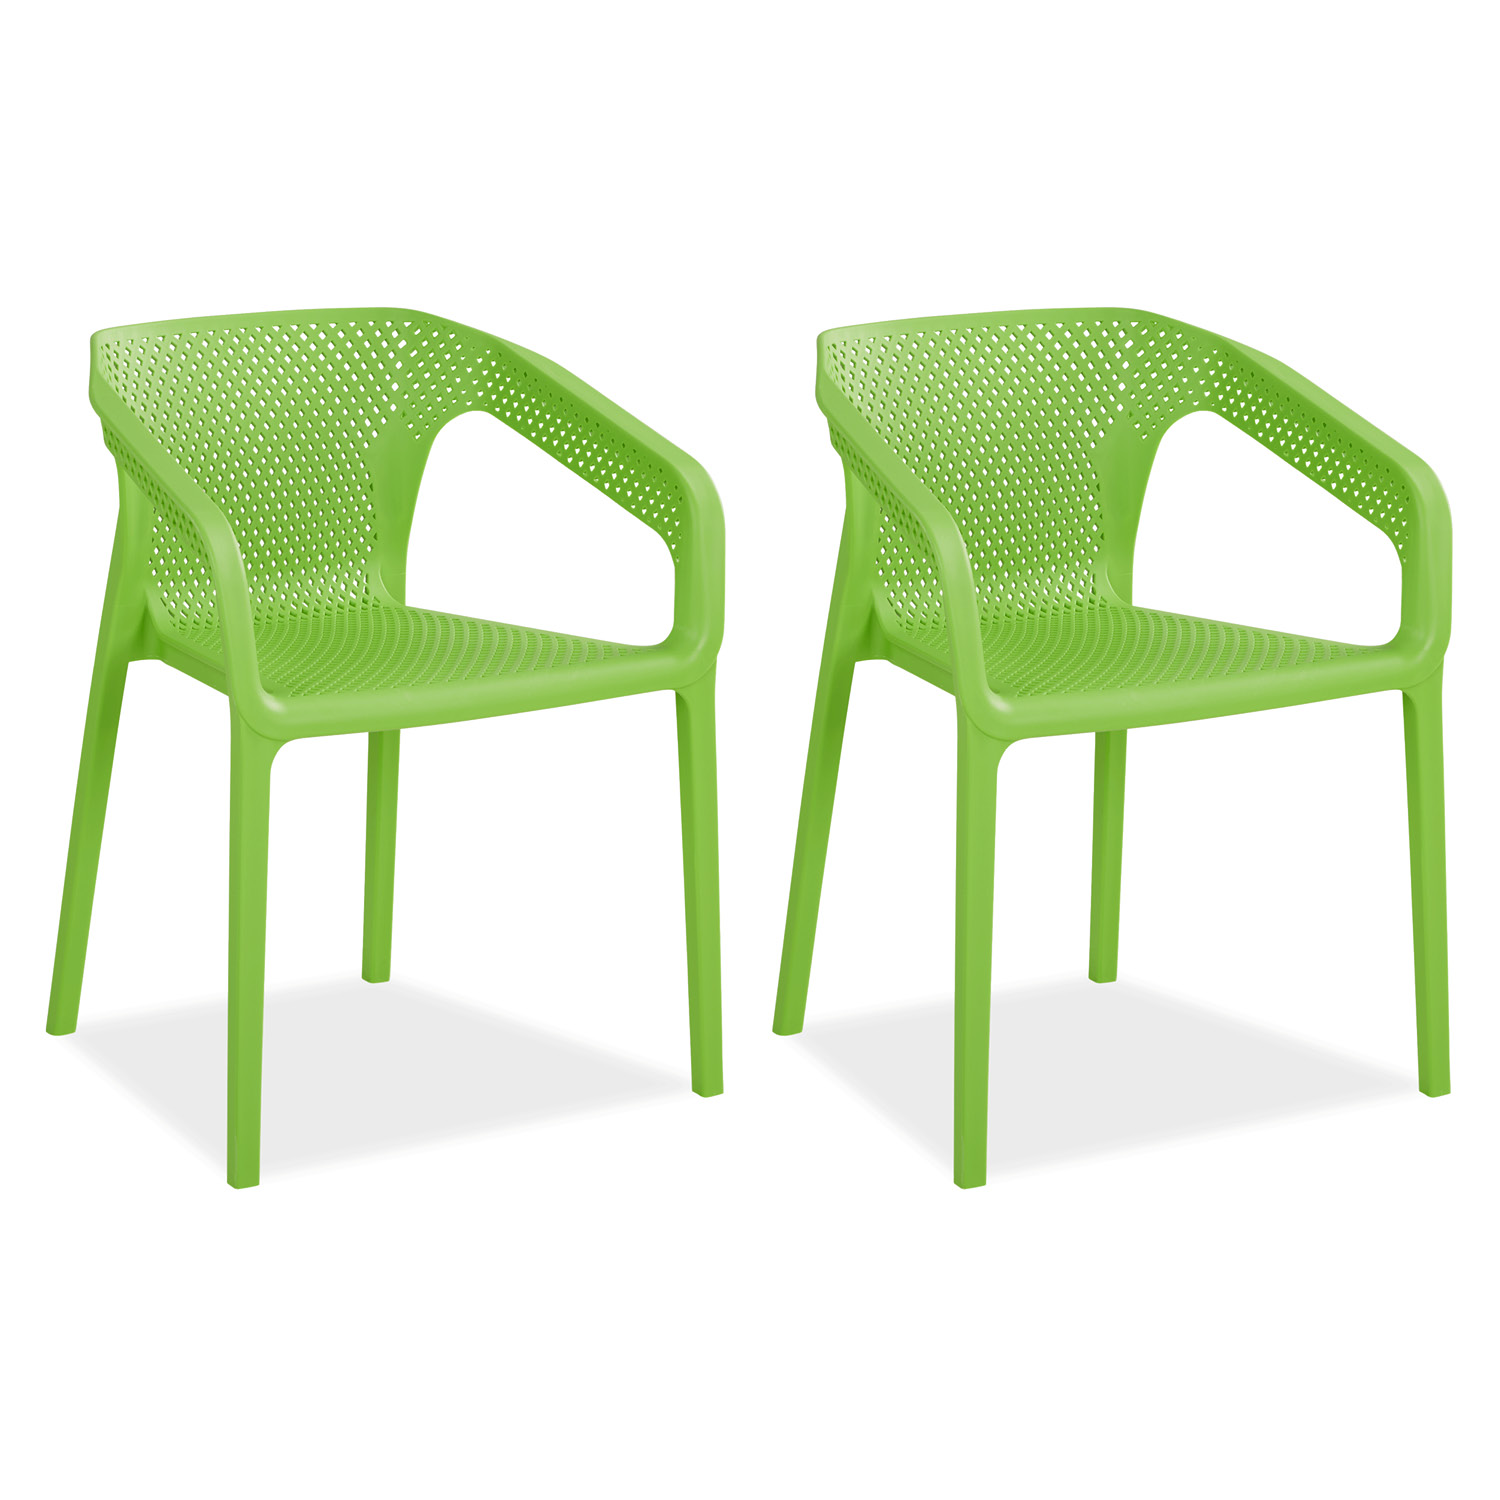 Gartenstuhl mit Armlehnen 2er Set Gartensessel Grün Stühle Kunststoff Stapelstühle Balkonstuhl Outdoor-Stuhl